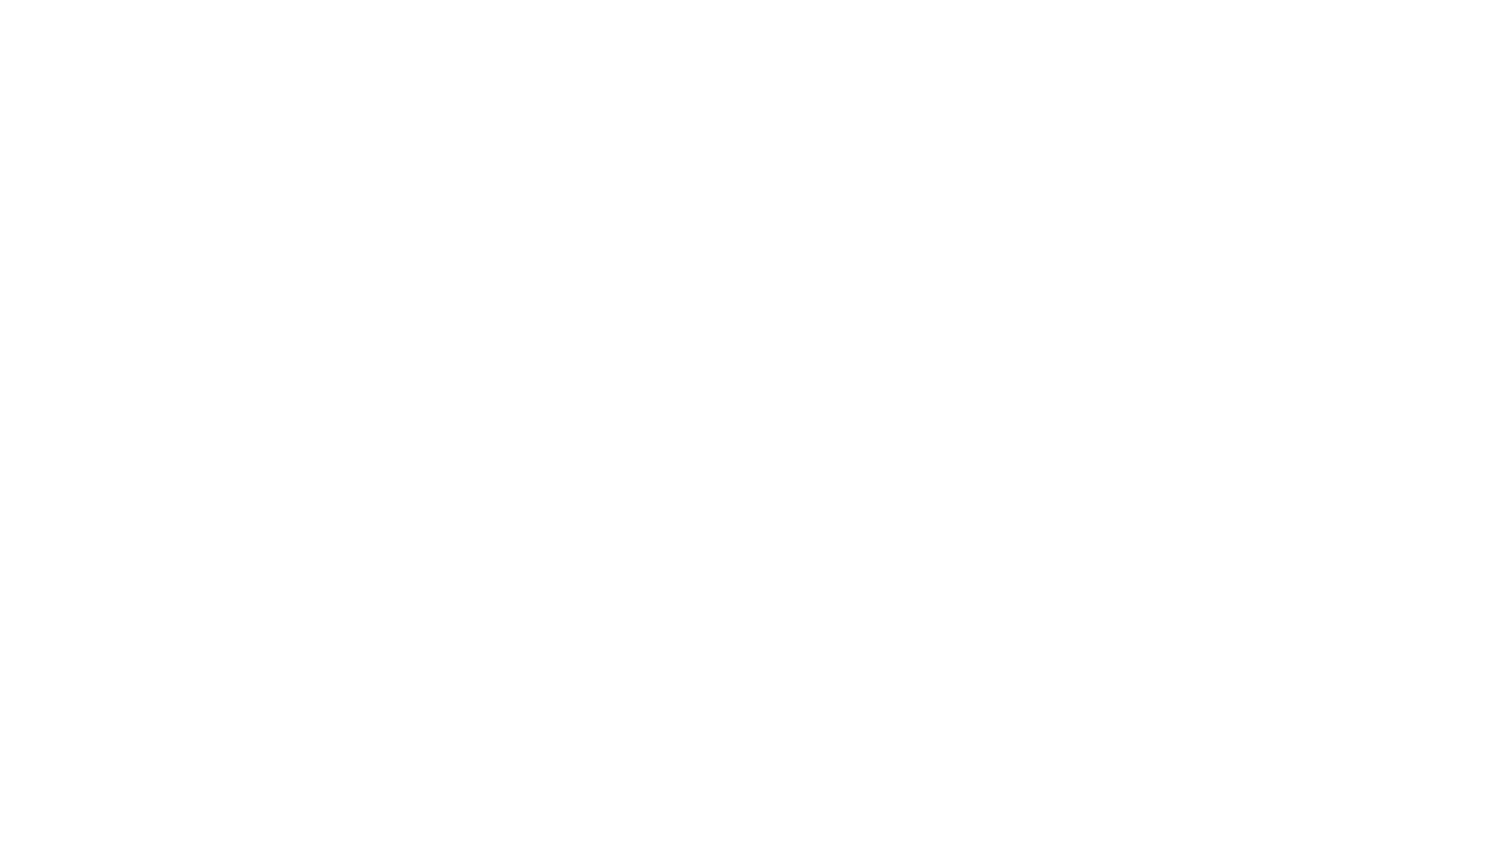 Tom Jehu Weddings